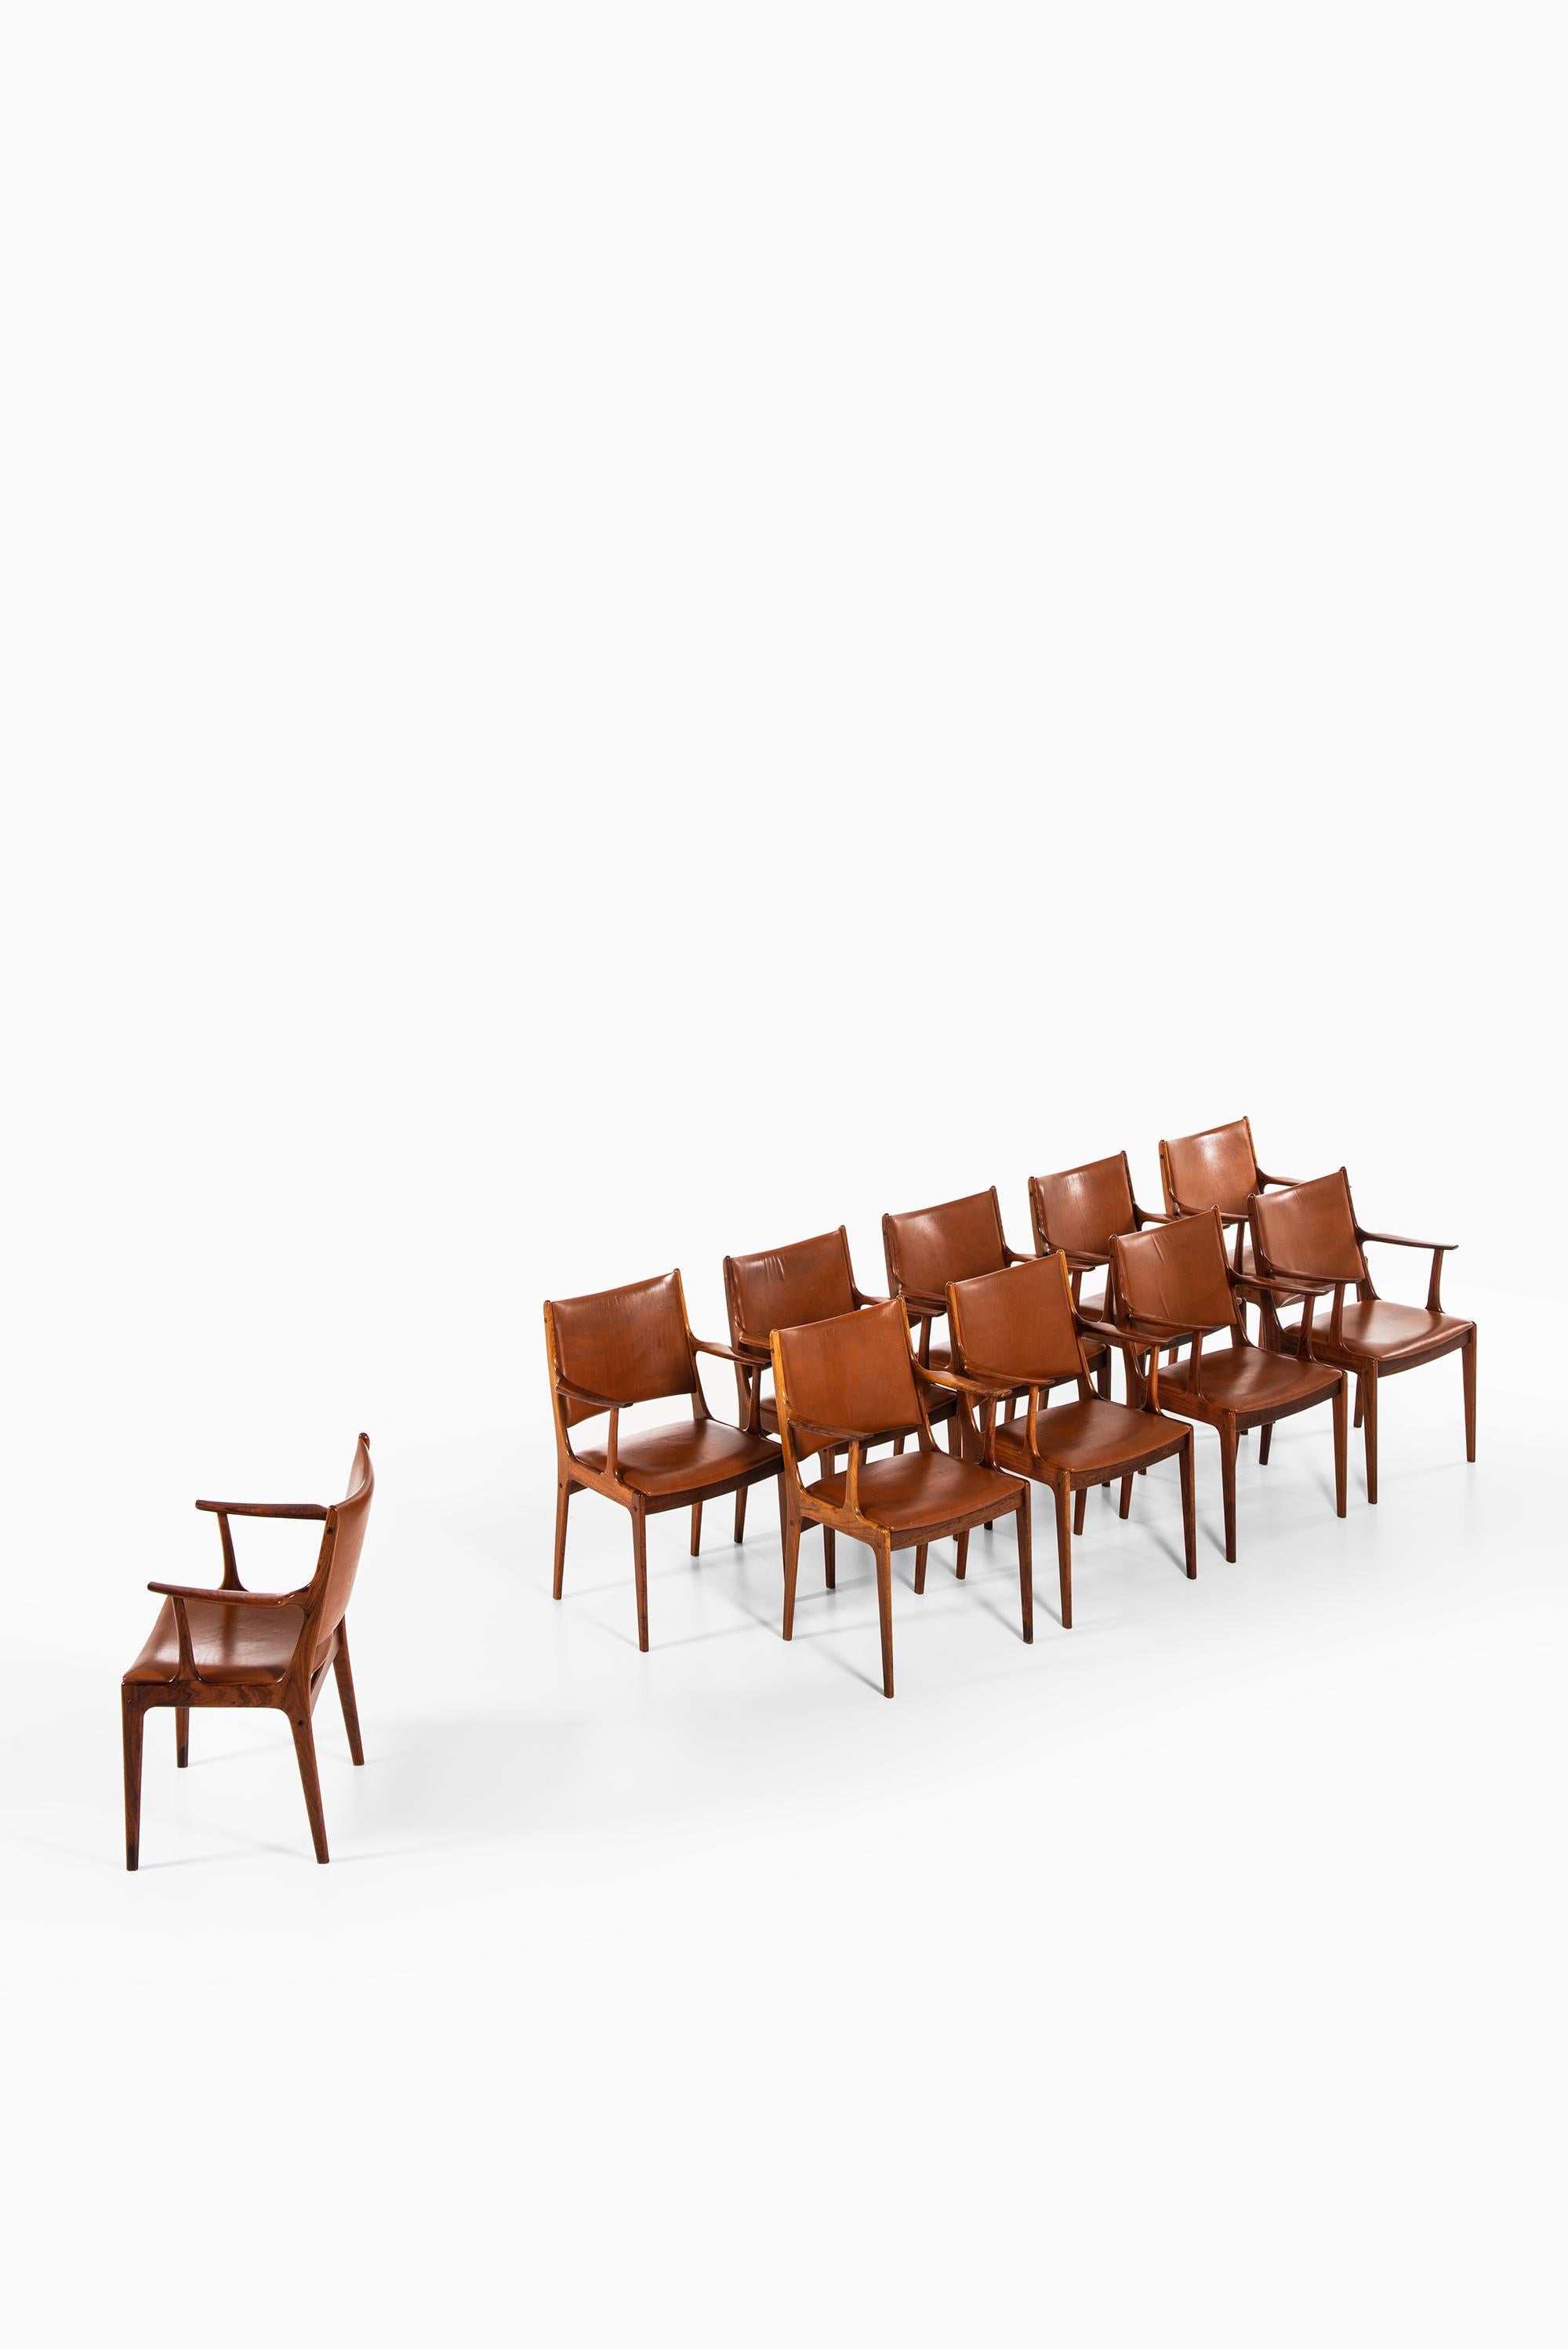 Leather Johannes Andersen Dining Chairs / Armchairs by Uldum Møbelfabrik in Denmark